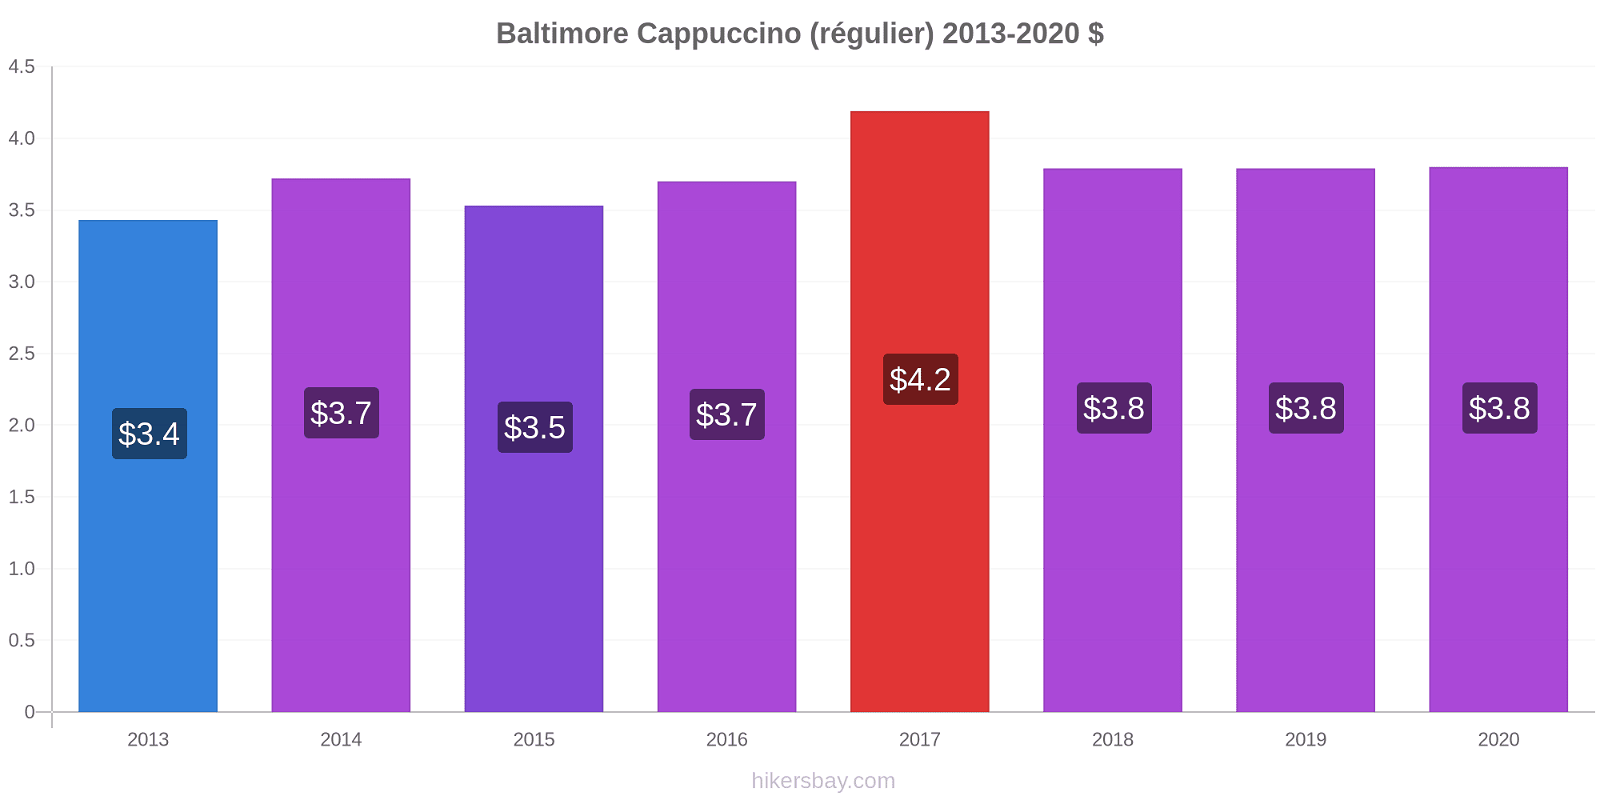 Baltimore changements de prix Cappuccino (régulier) hikersbay.com